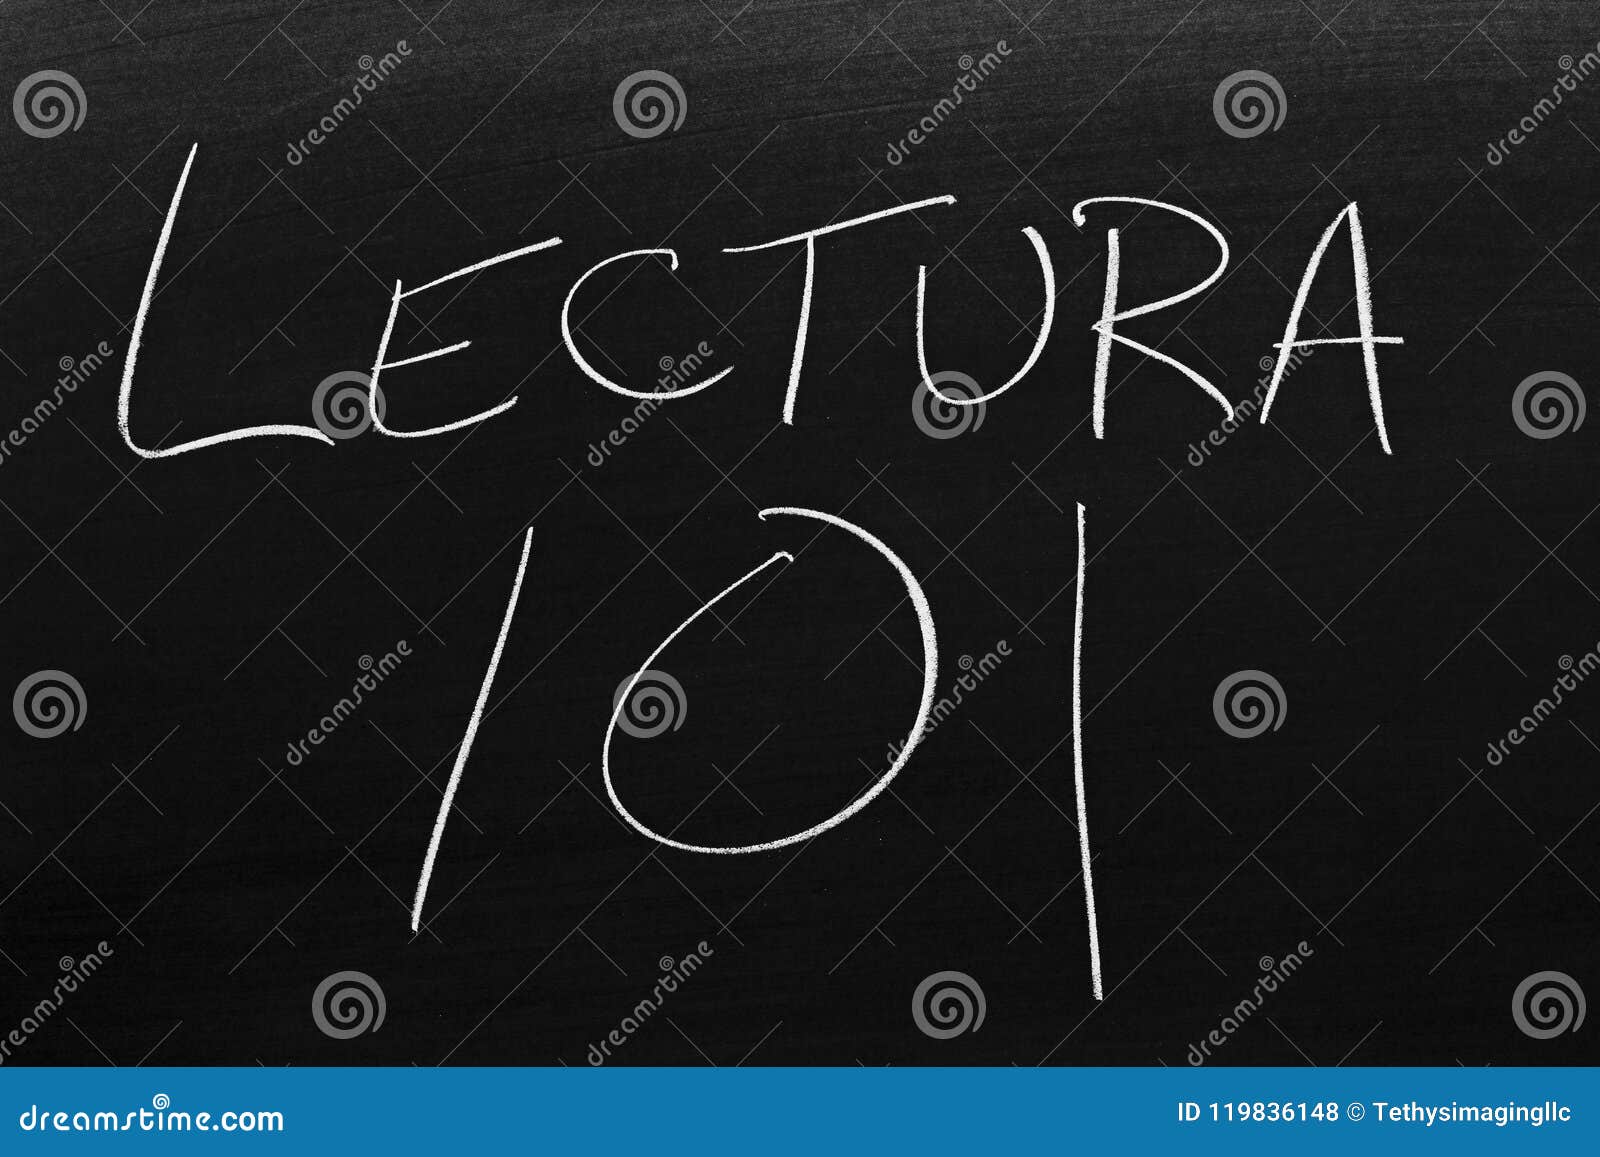 lectura 101 on a blackboard. translation: reading 101